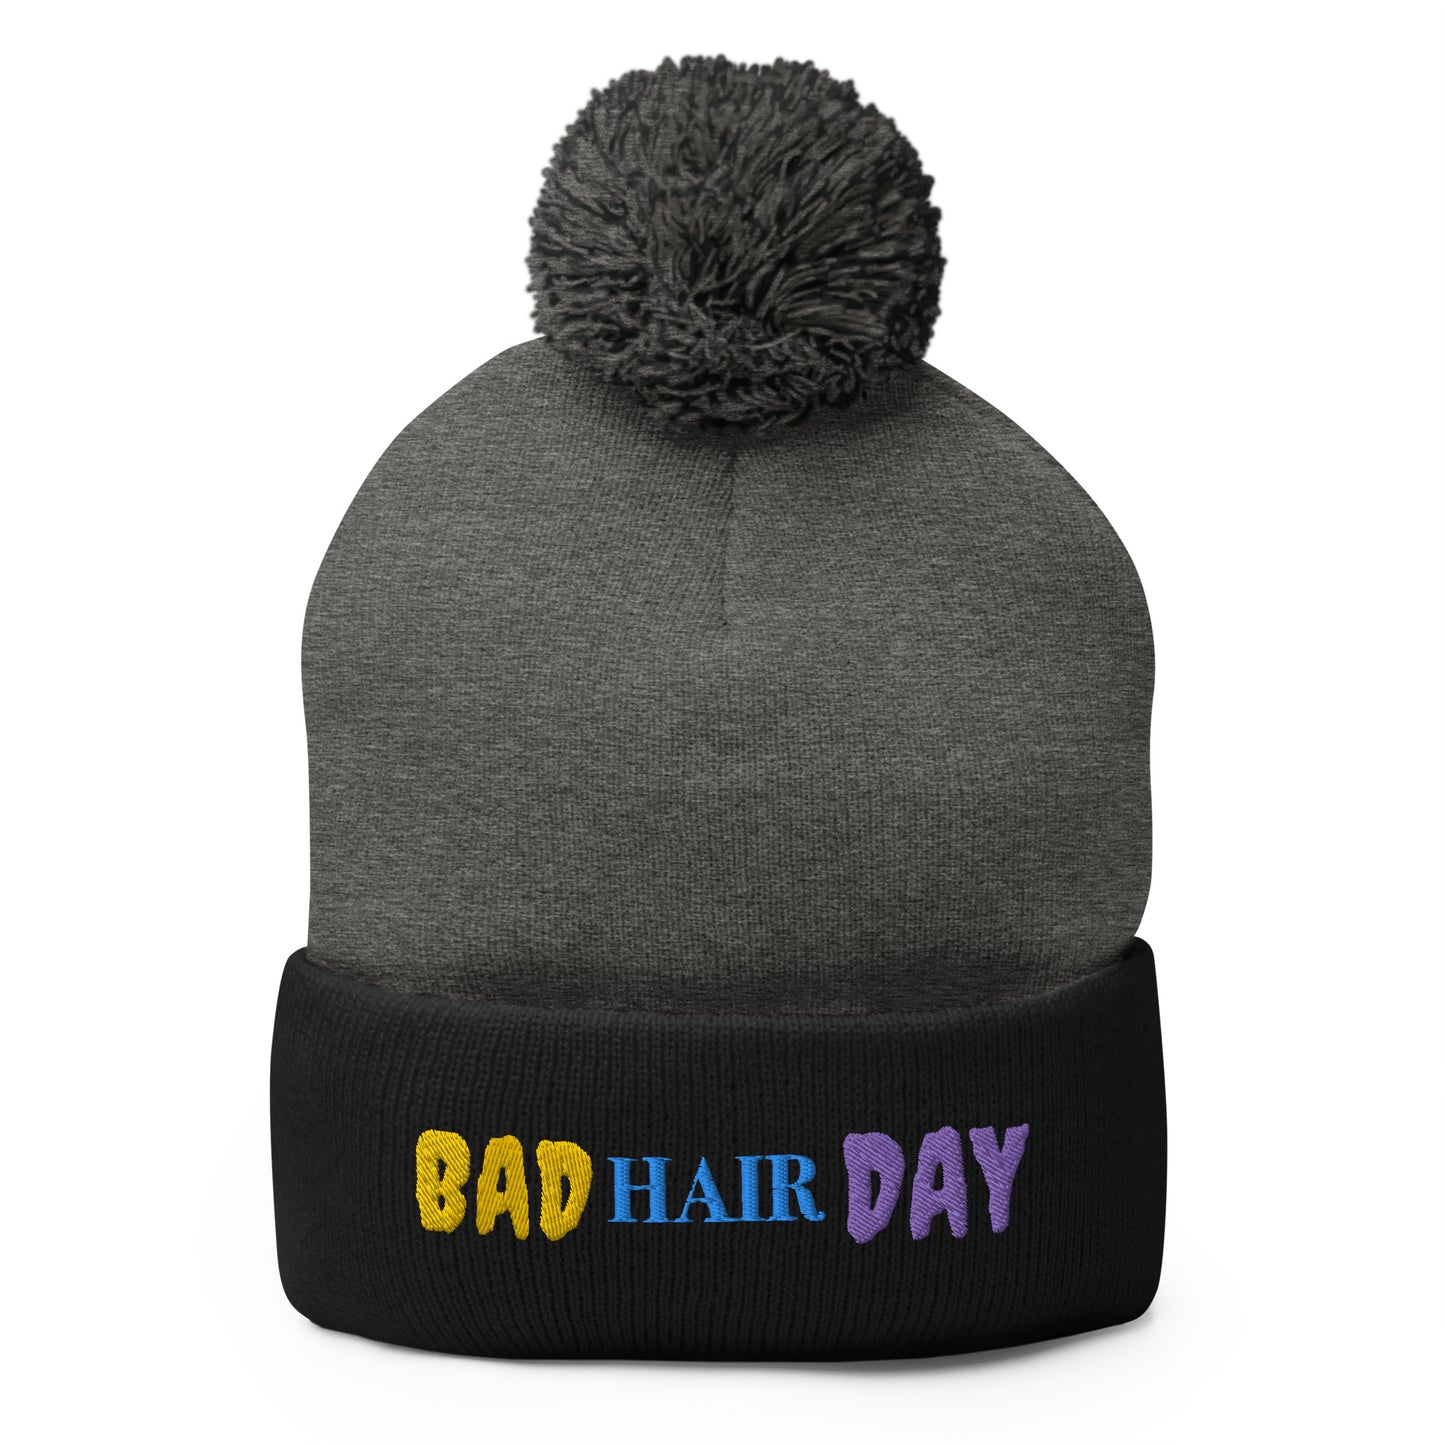 Bad Hair Day Pom-Pom Beanie